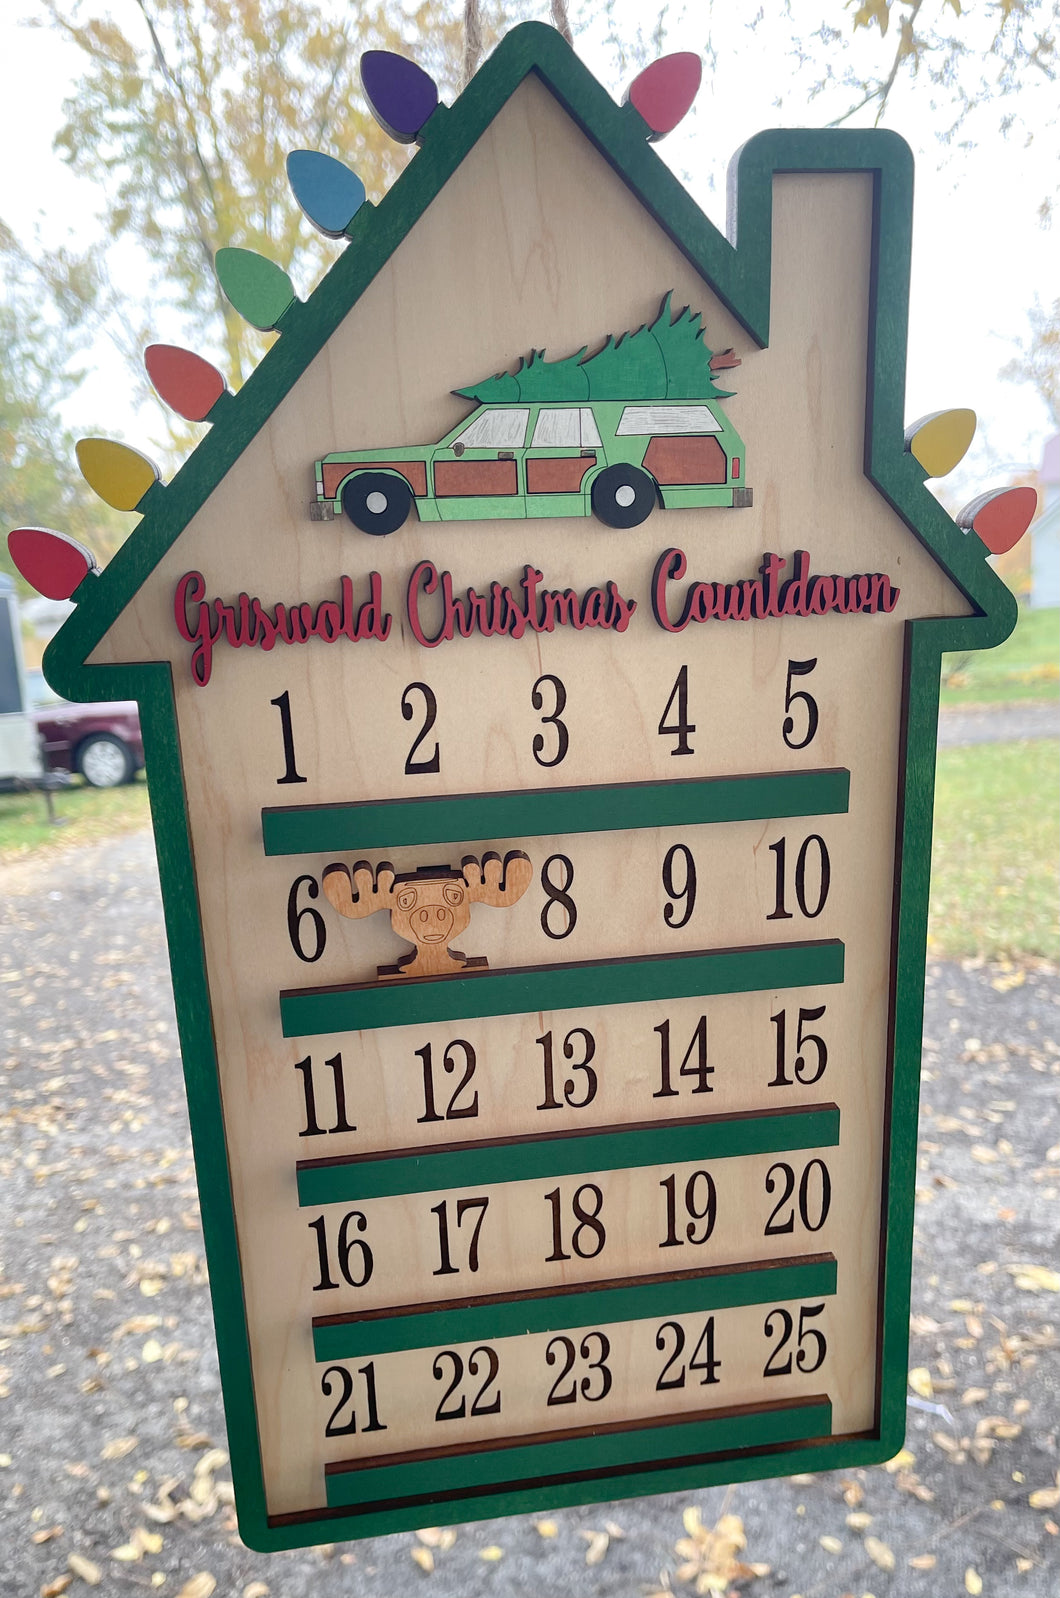 Christmas Vacation Countdown Calendar - Wood - Station Wagon